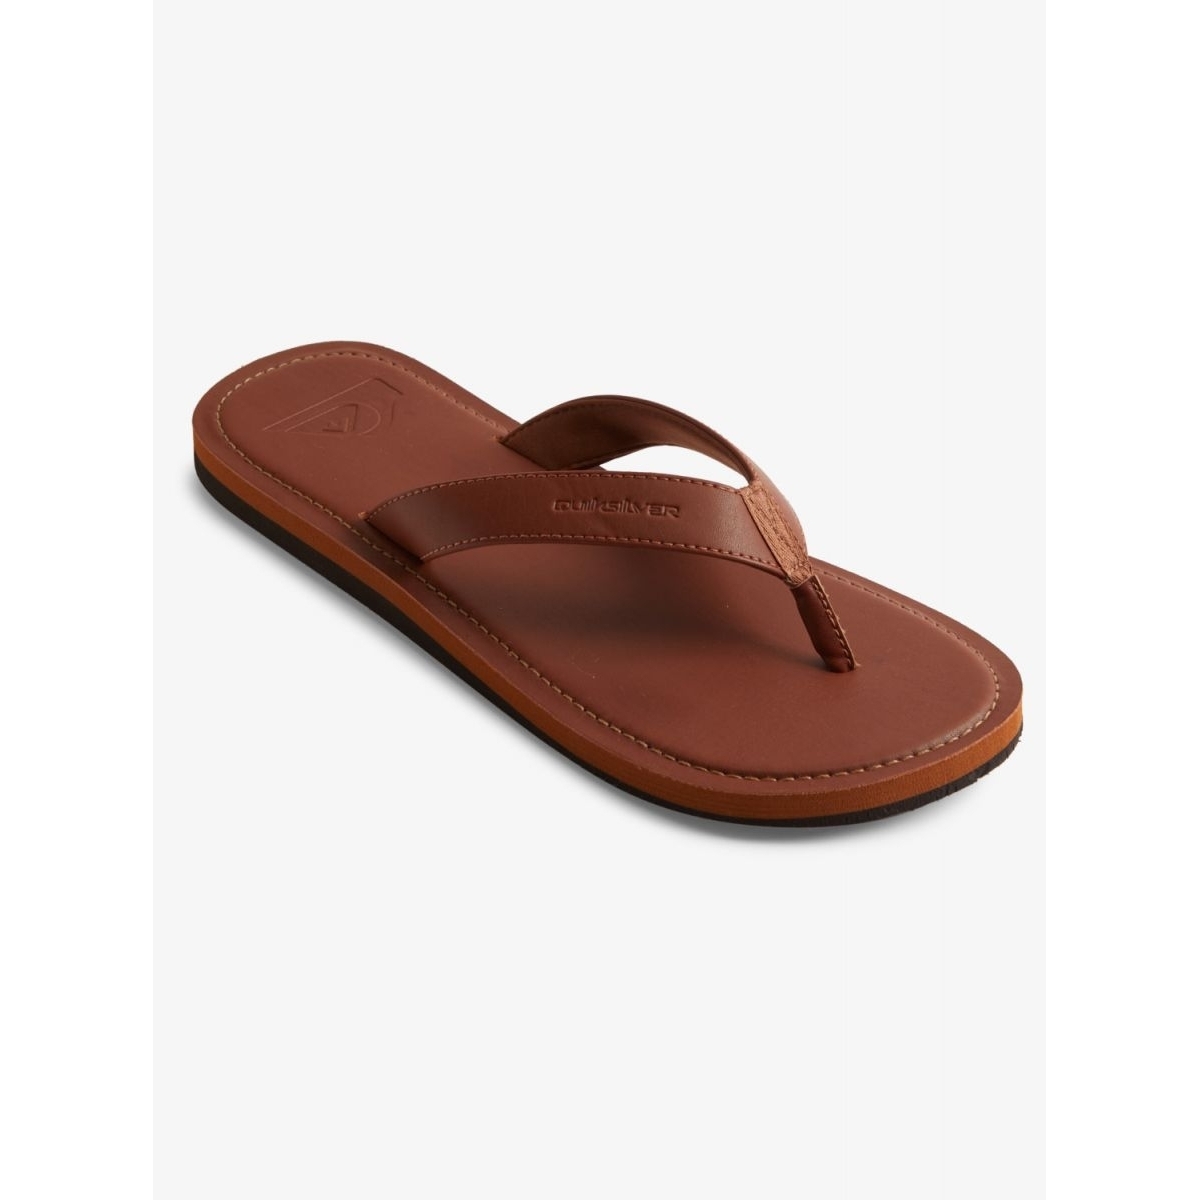 Quiksilver Men's Molokai Nubuck Flip Flop Sandals Tan Solid - AQYL100960-TKD0 TAN SOLID - TAN SOLID, 12